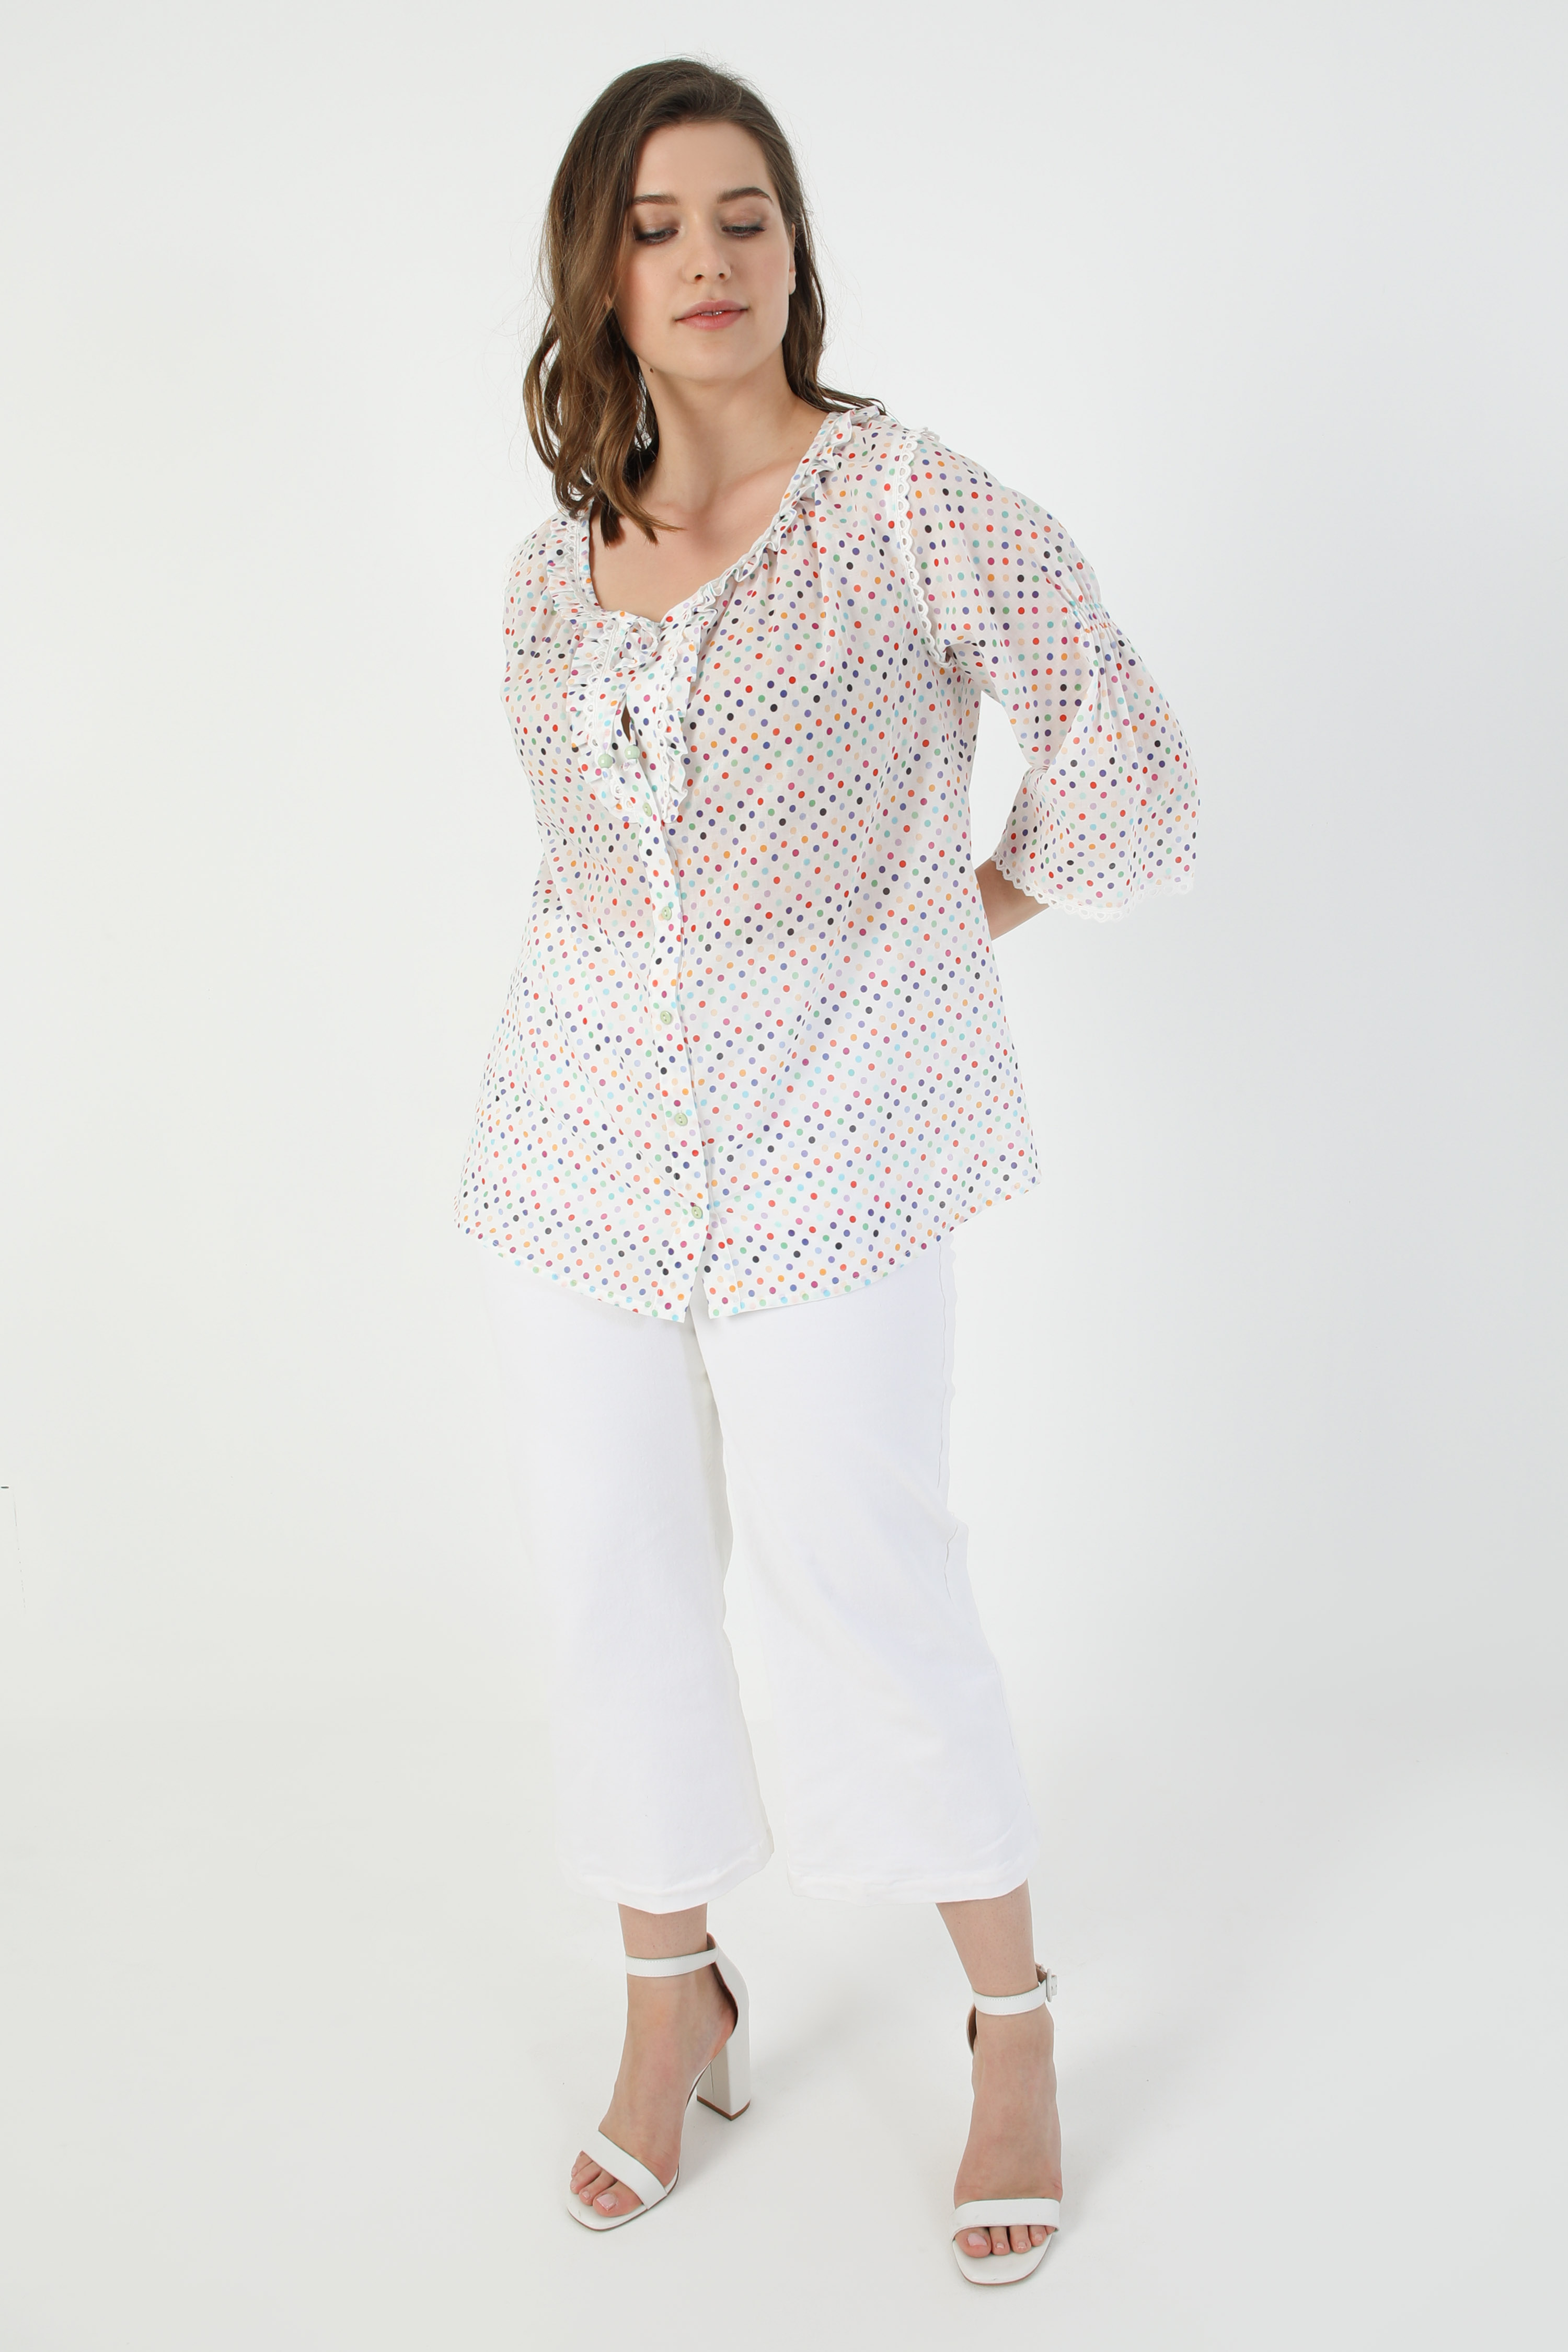 Shirt with multicolored polka dots eco-responsible fabrics